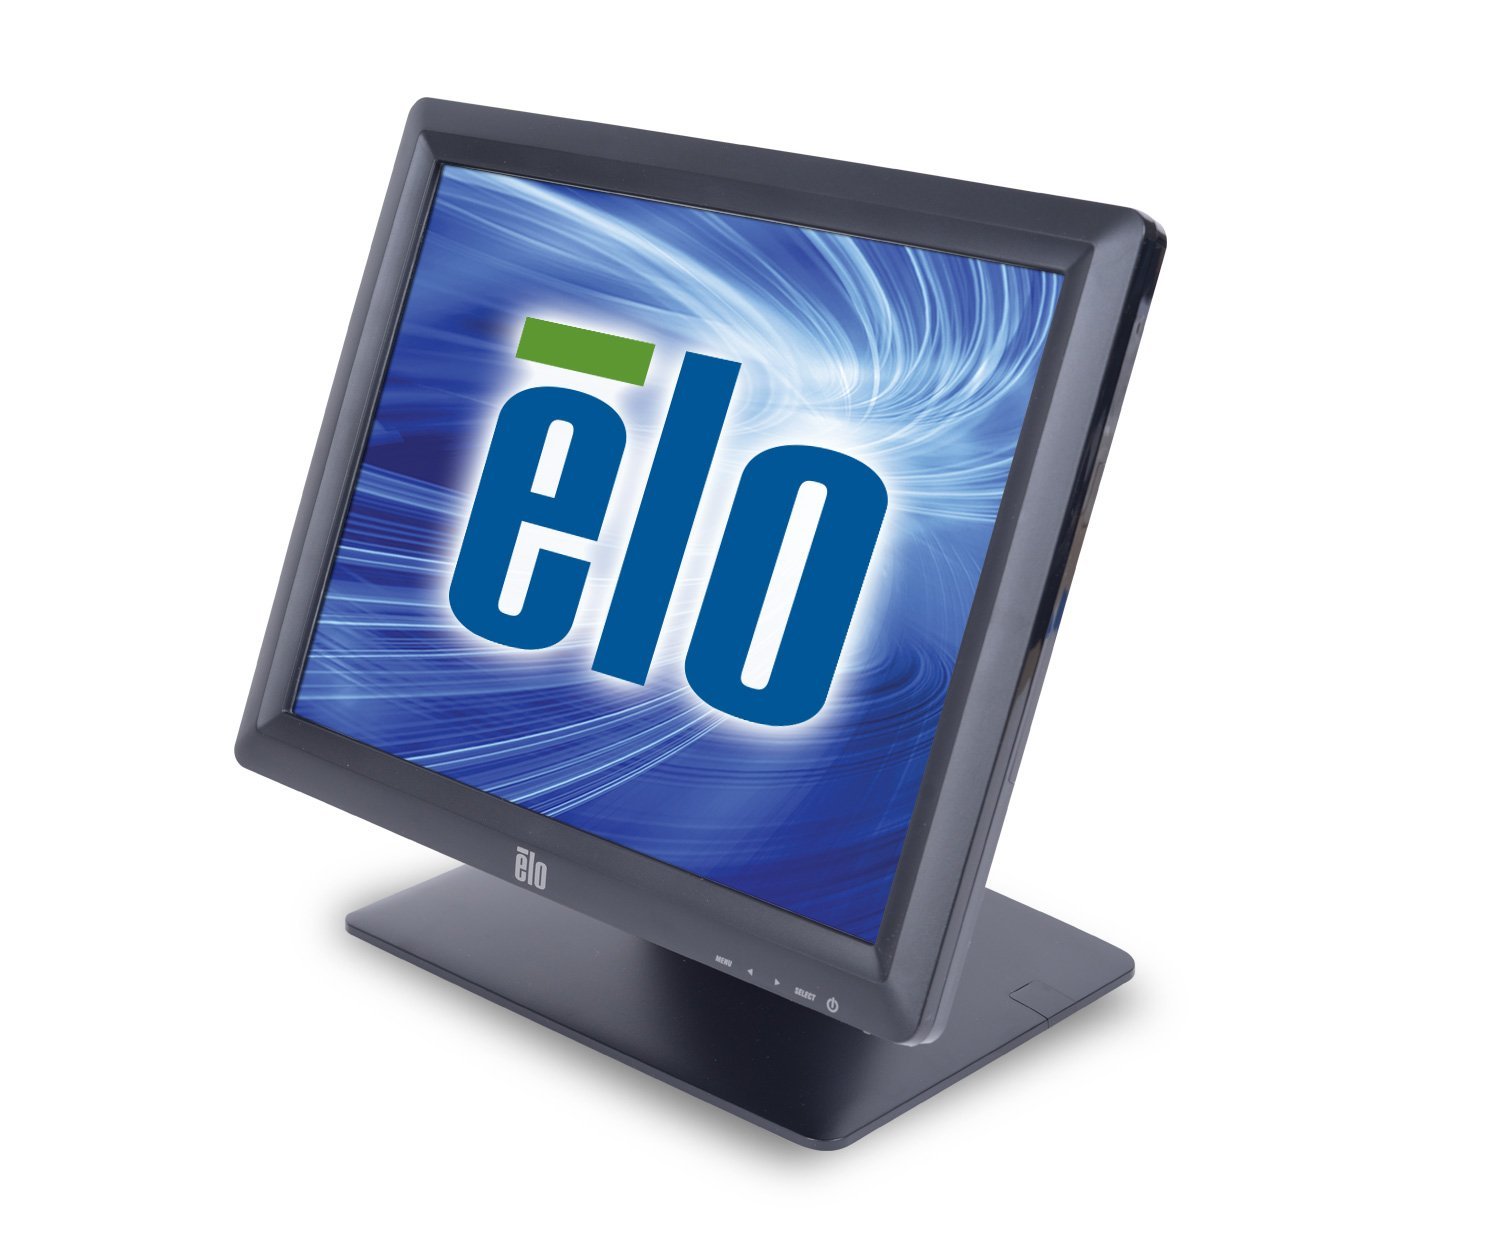 Elo Desktop Touchmonitors 1517L AccuTouch - 15" Touchscreen LED Monitor